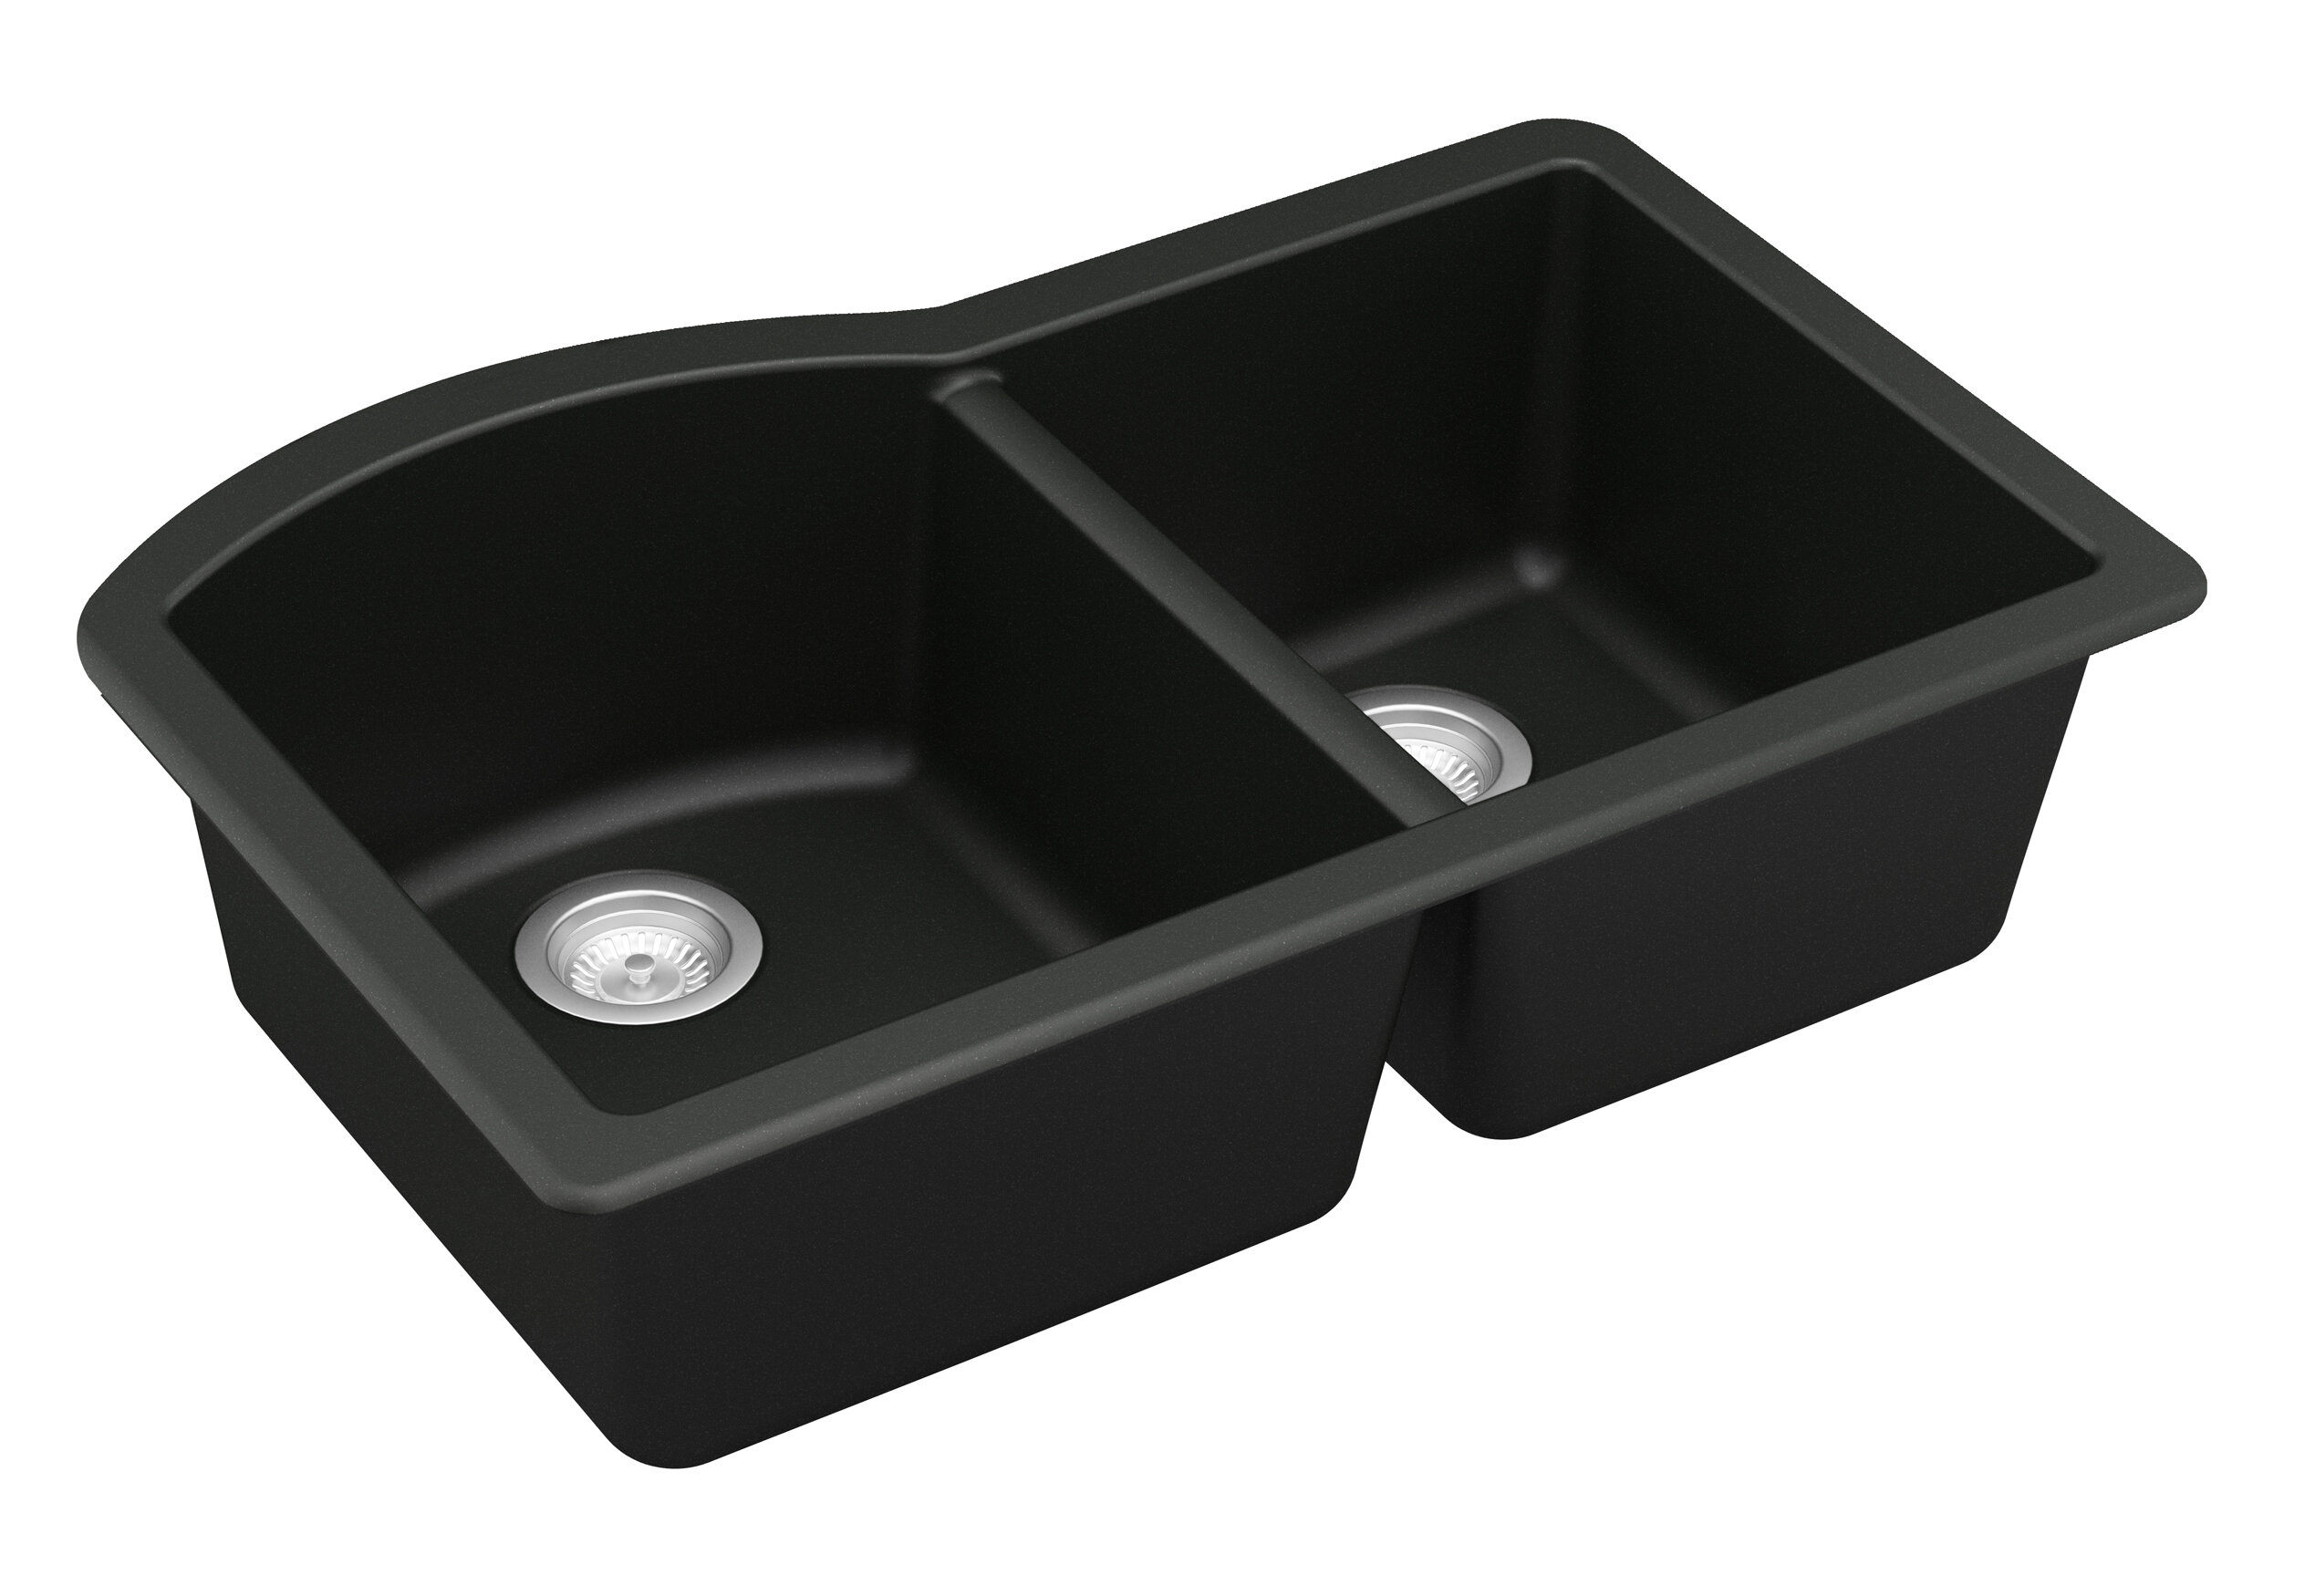 Karran 32 X 21 Double Basin Undermount Kitchen Sink Reviews Wayfair